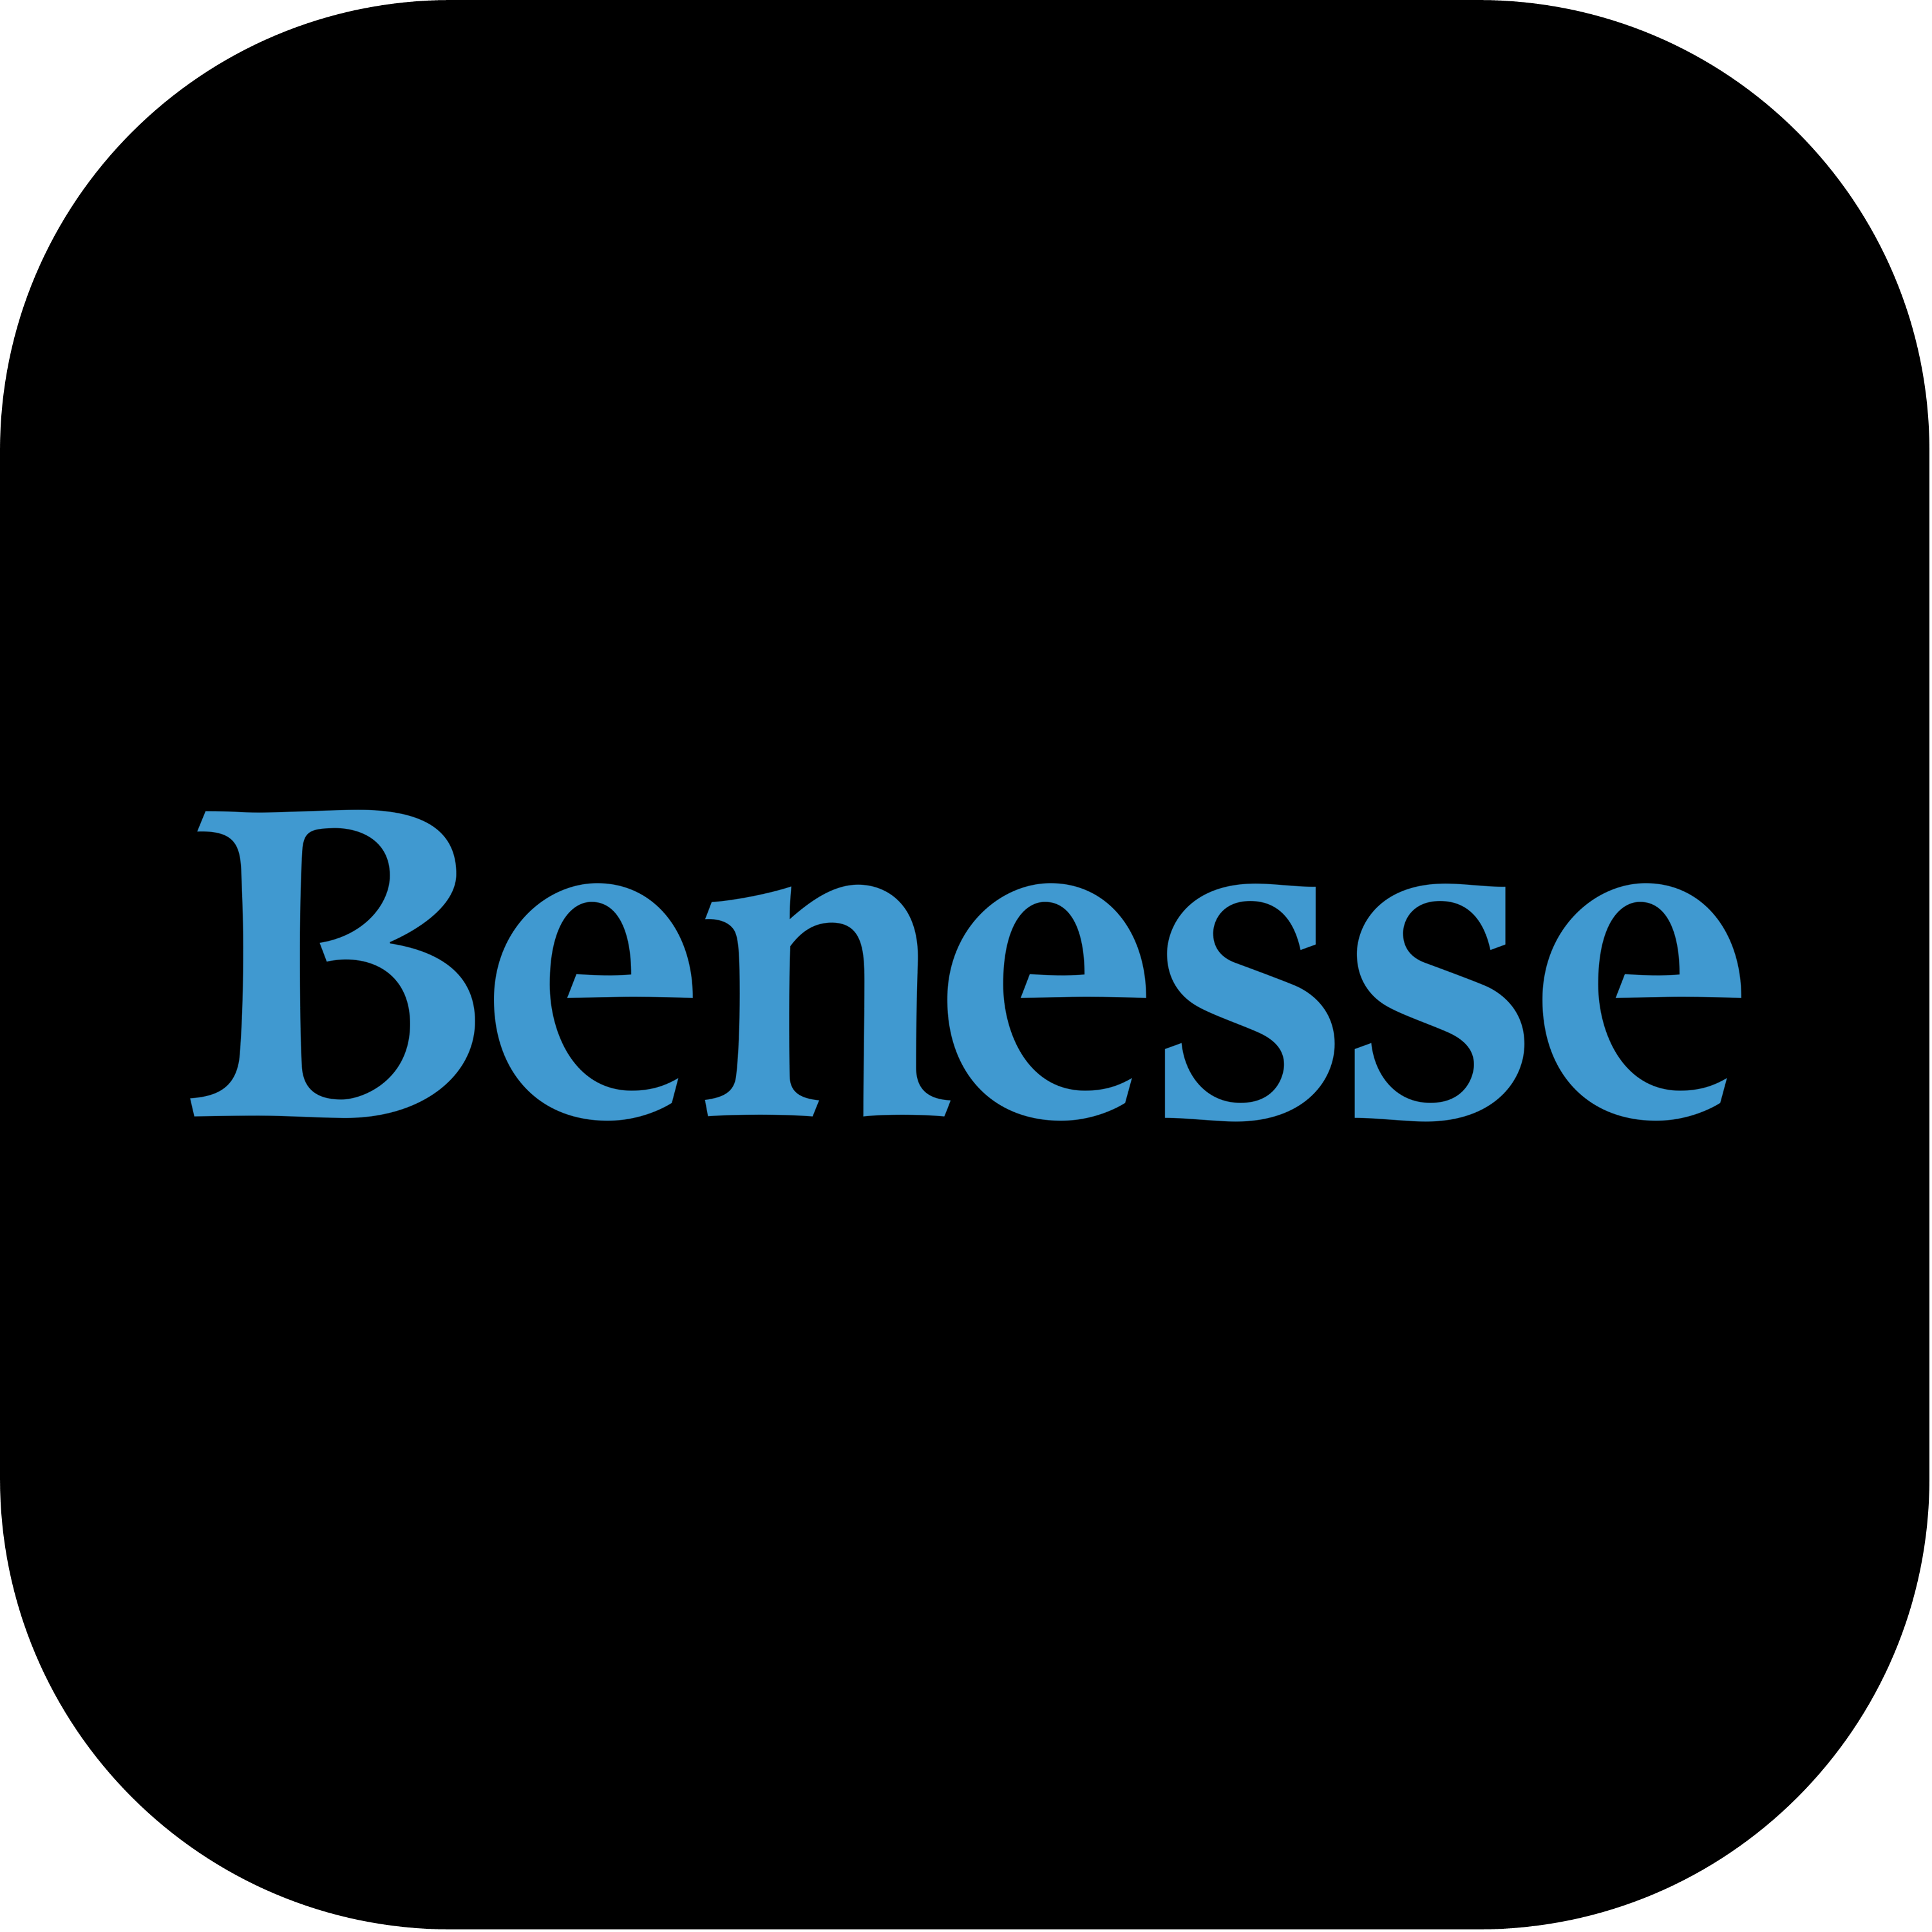 Benesse Logo Transparent Photo